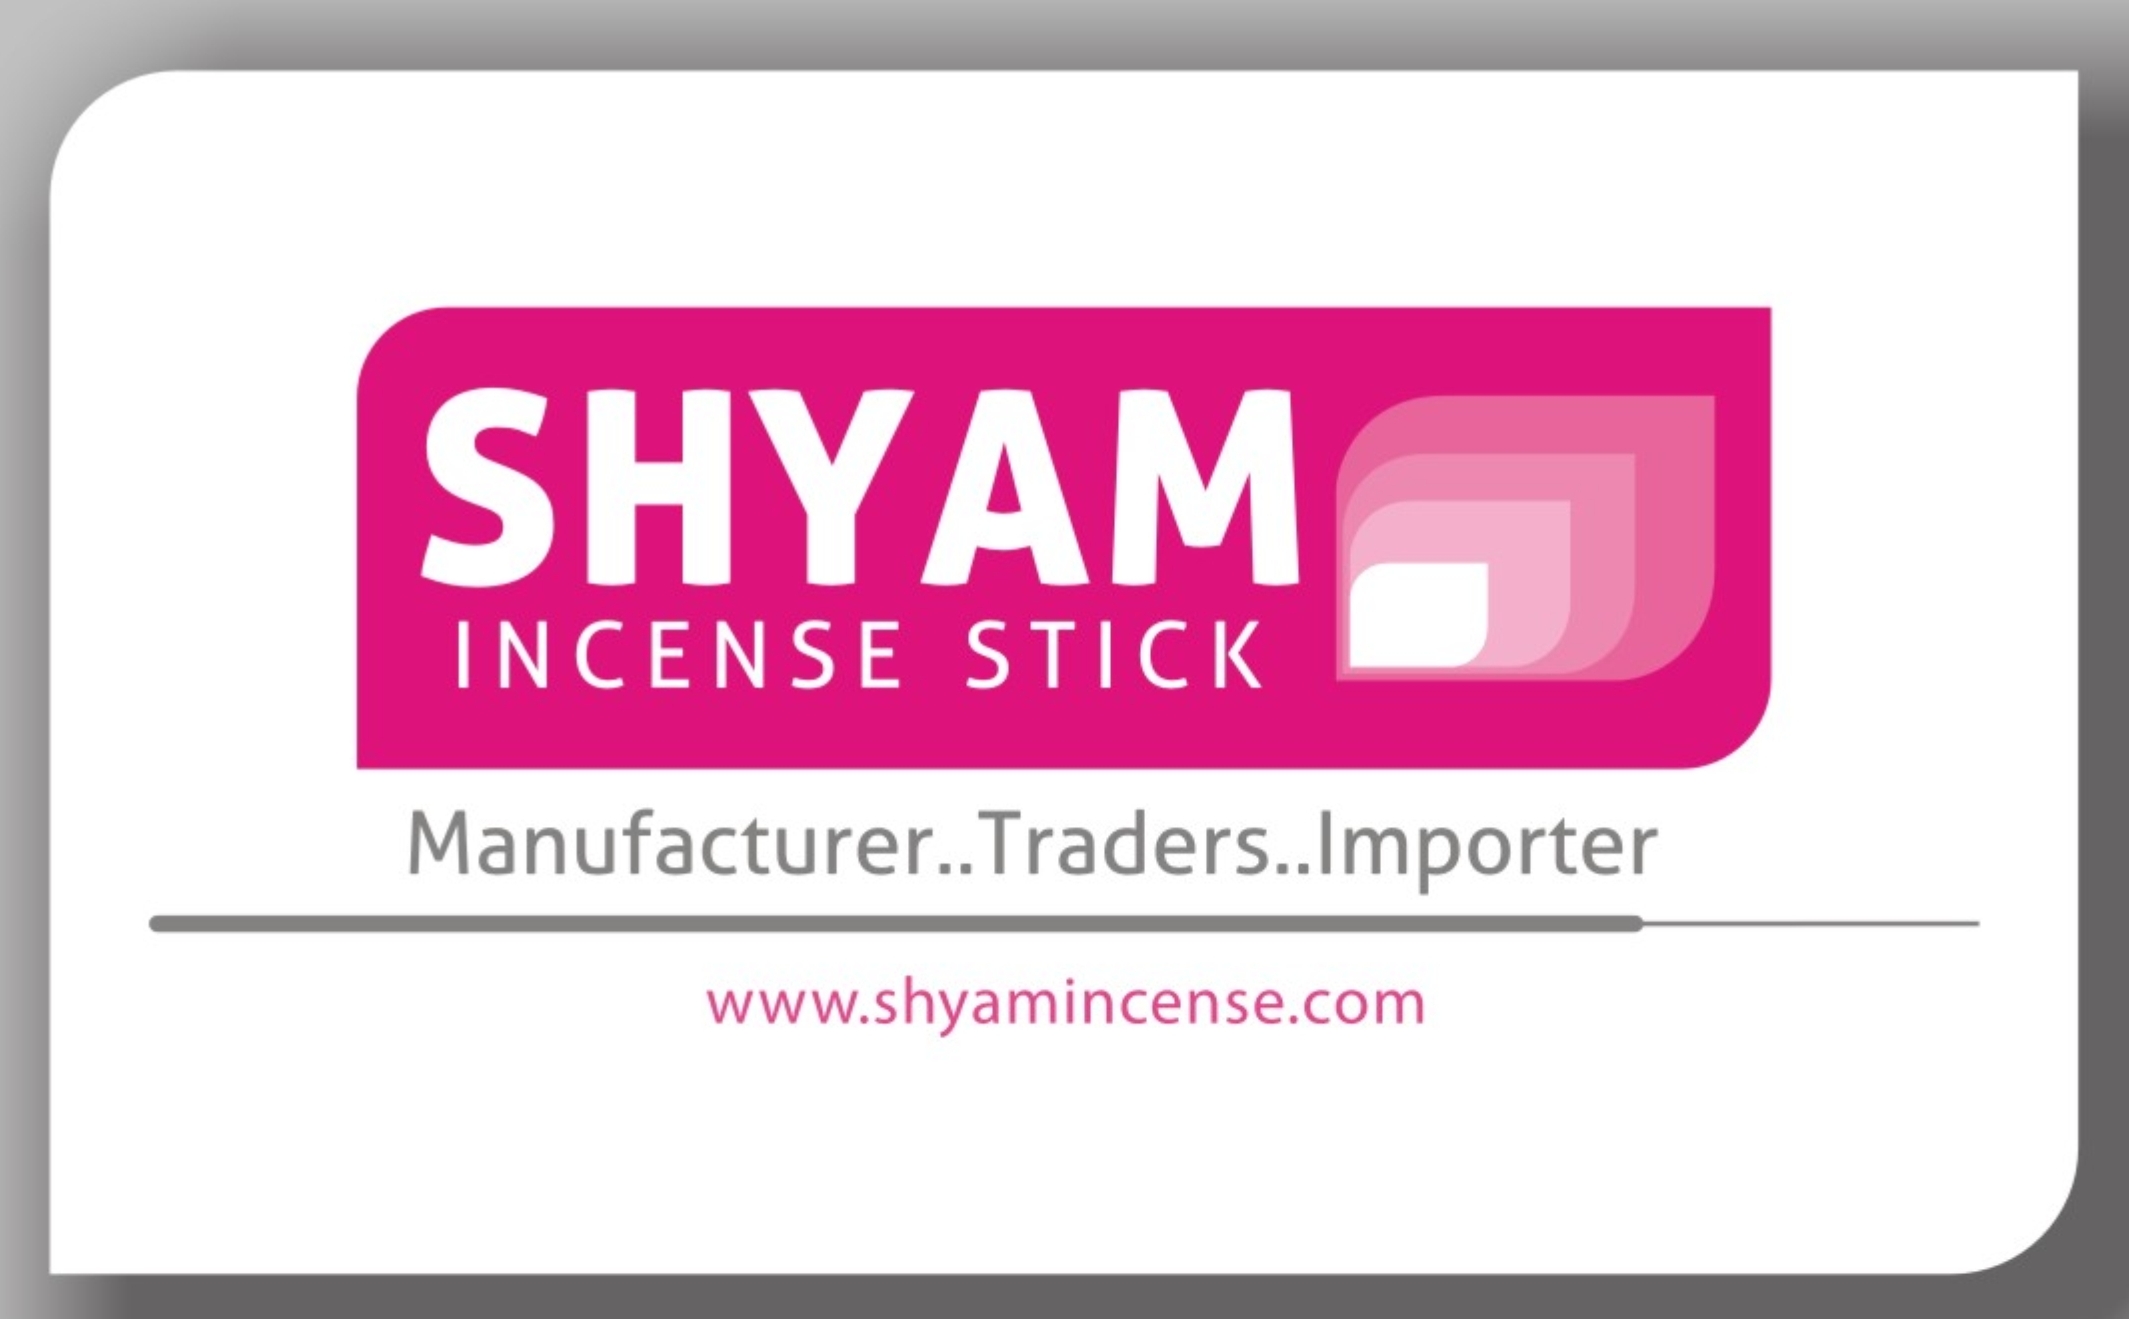 Shyam Incense Stick